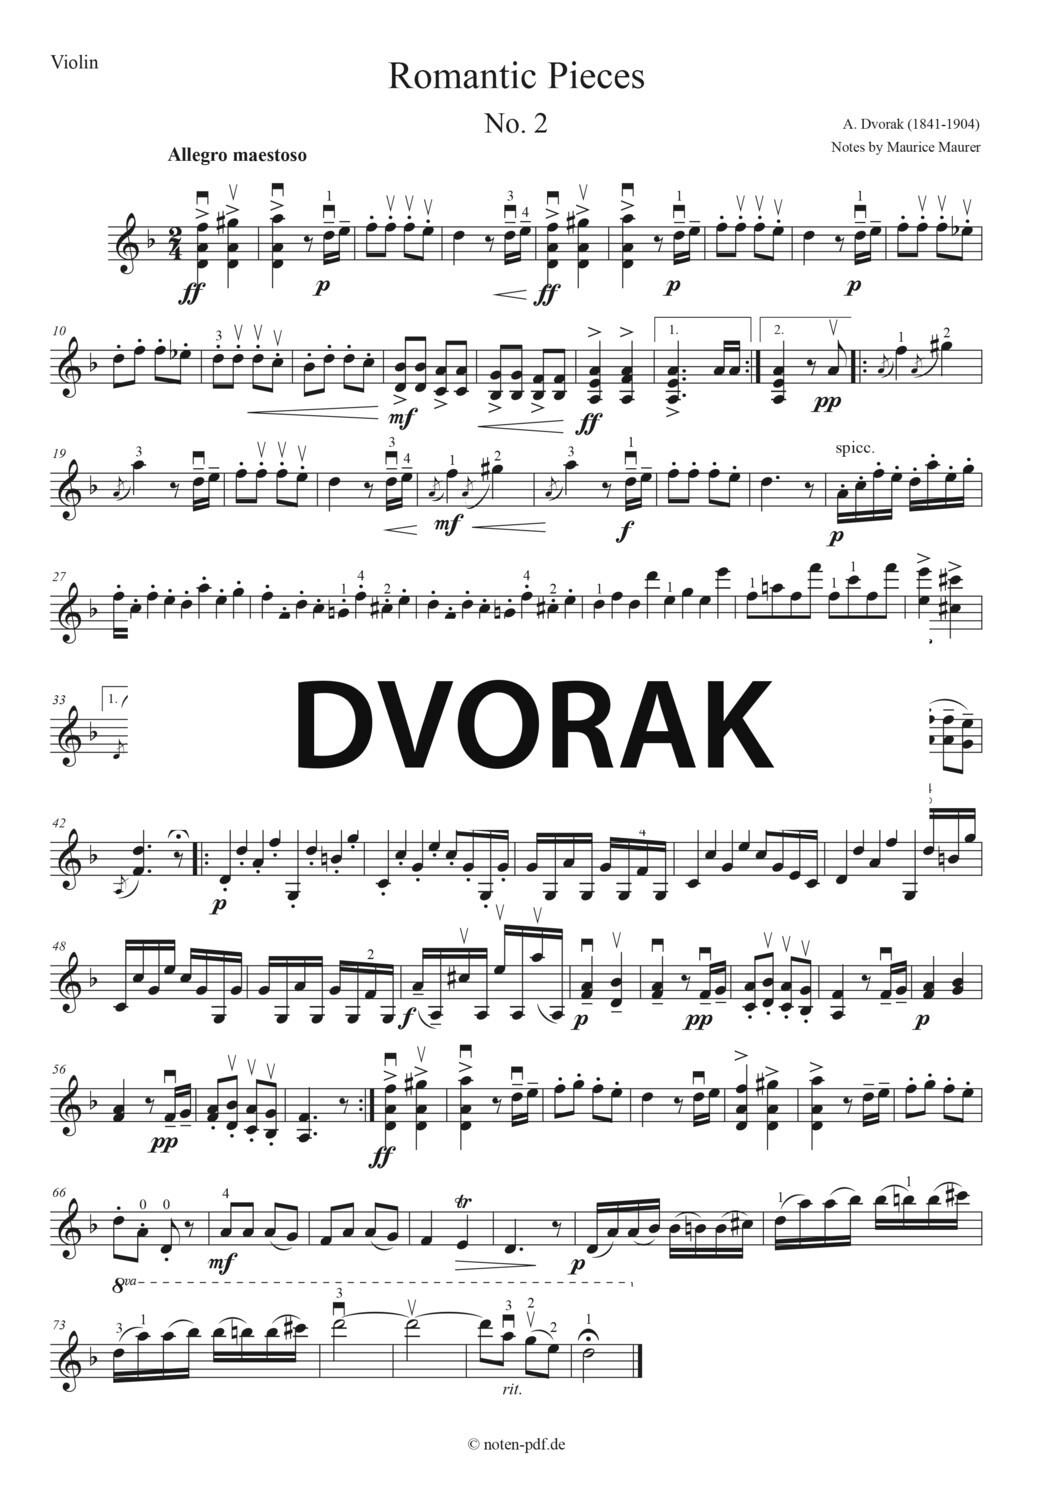 Dvorak: Romantic Pieces - No. 2 (Violin Sheet Music)